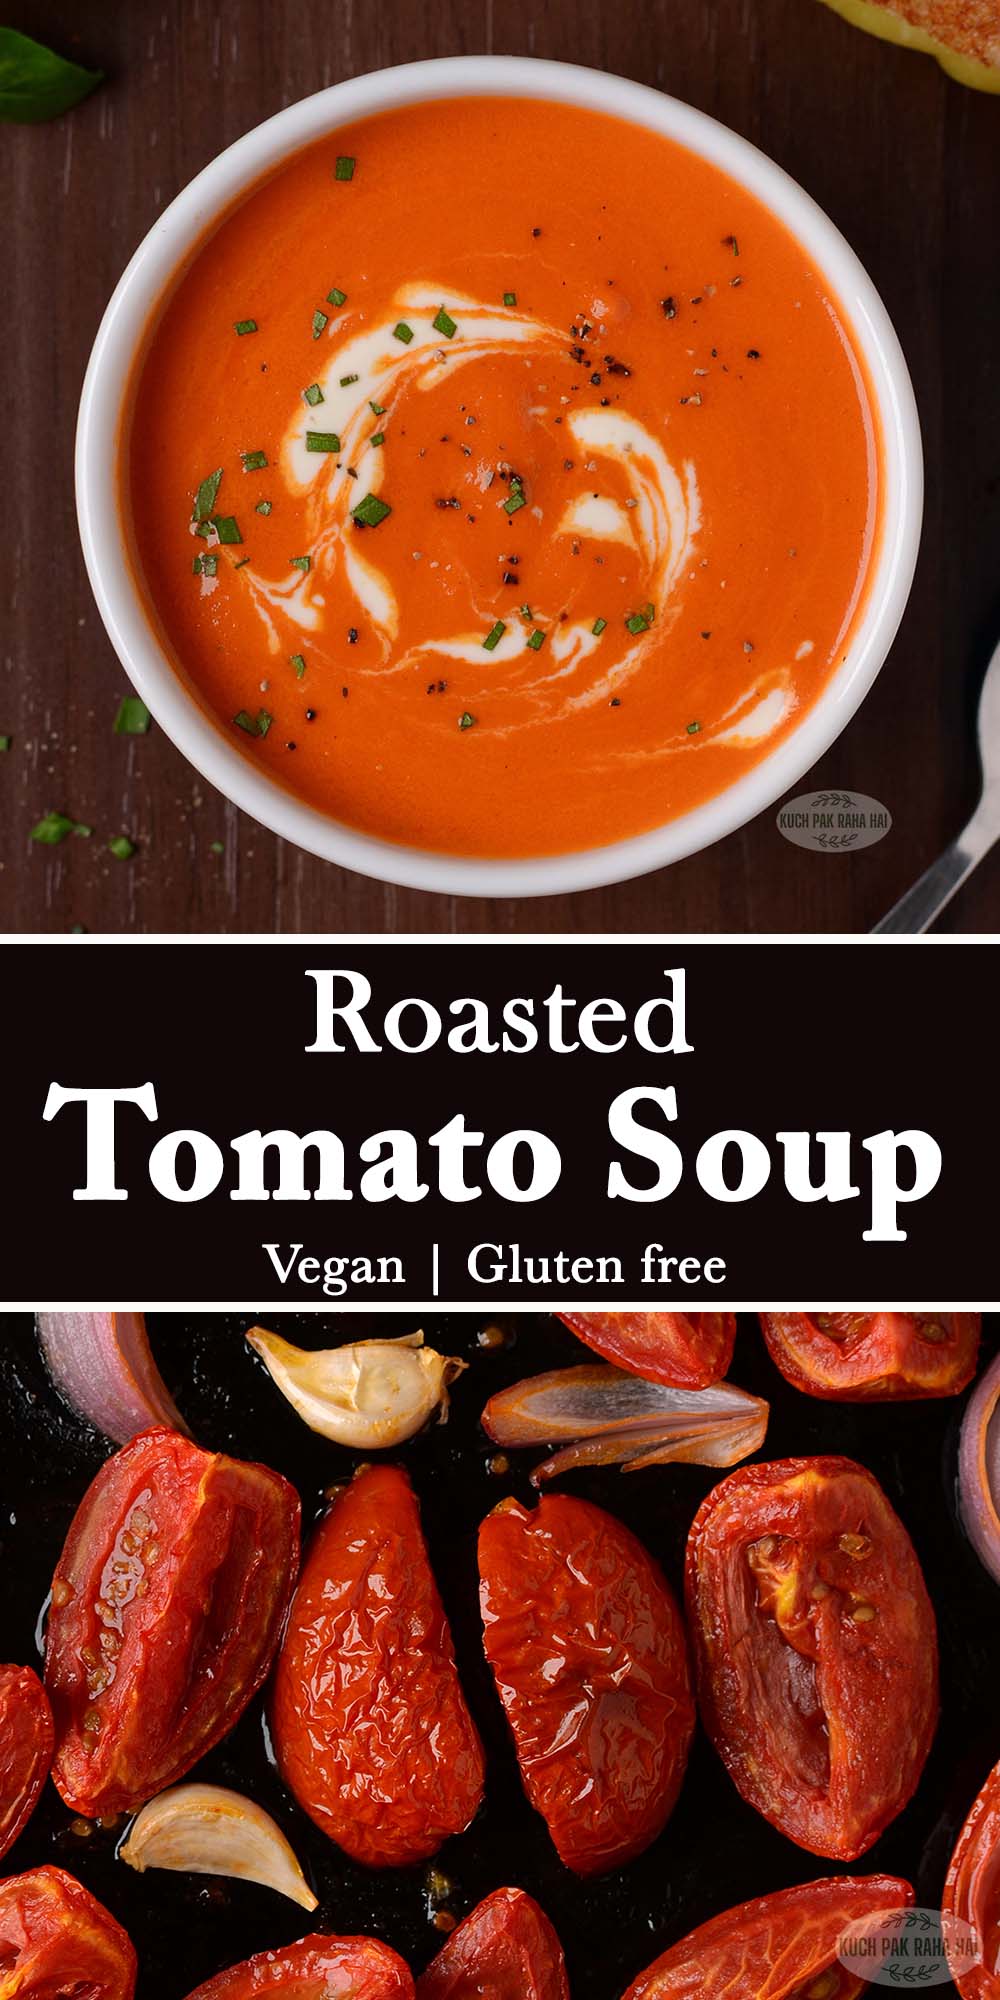 Roasted tomato soup recipe with garlic basil.